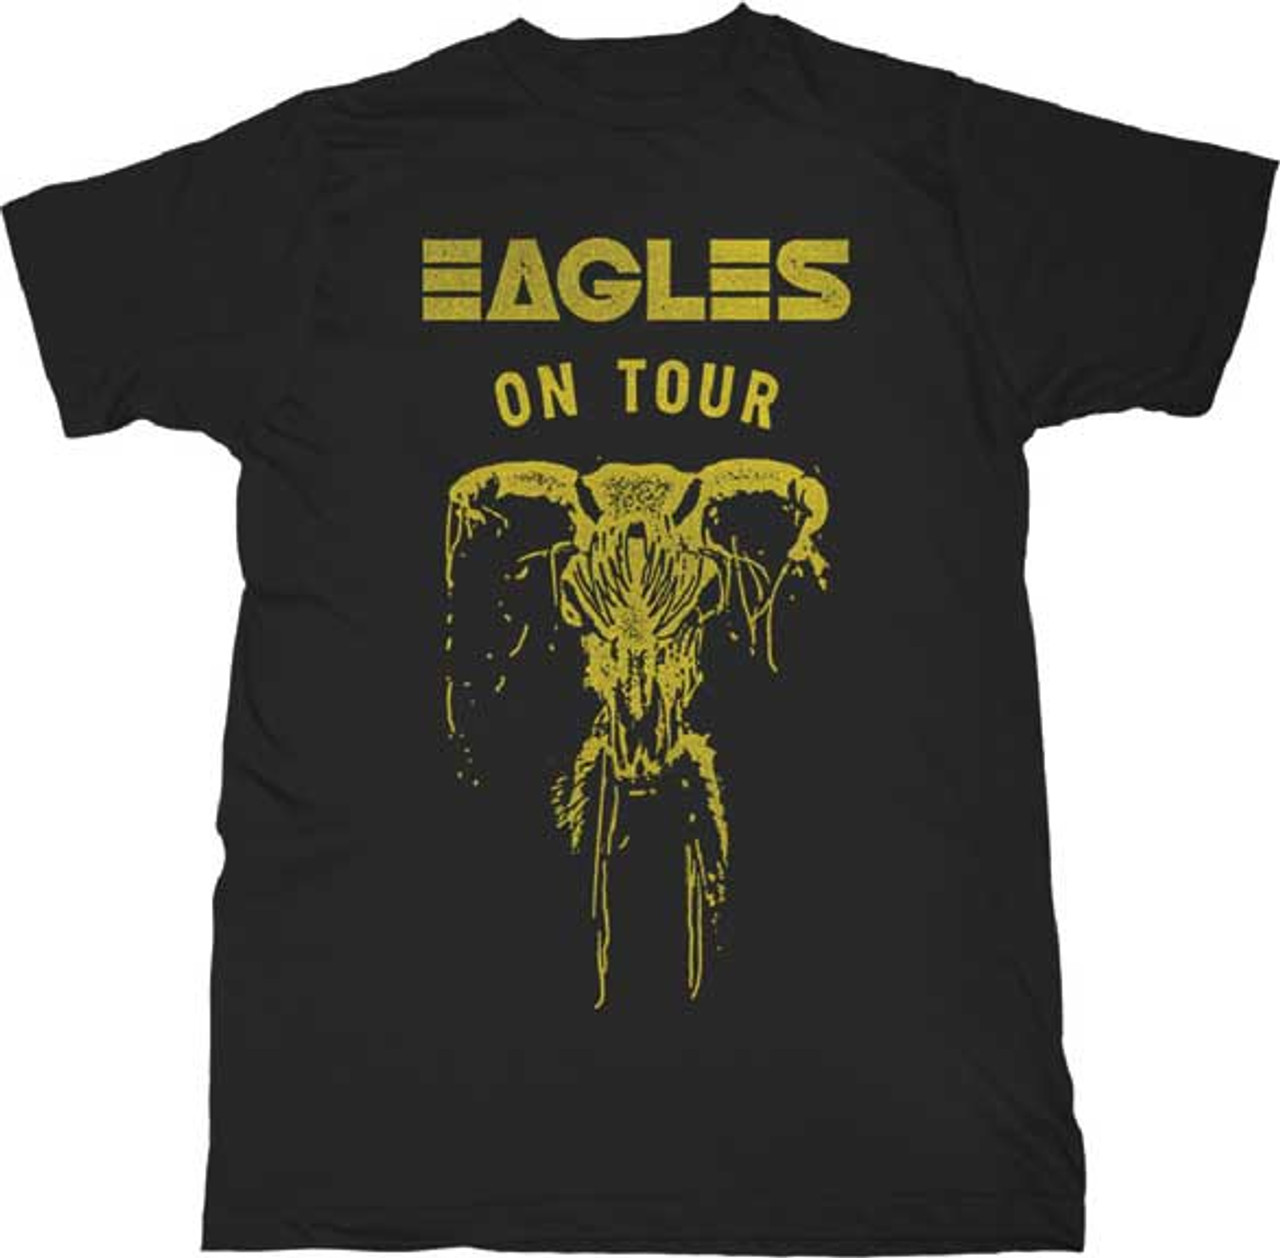 the eagles shirt